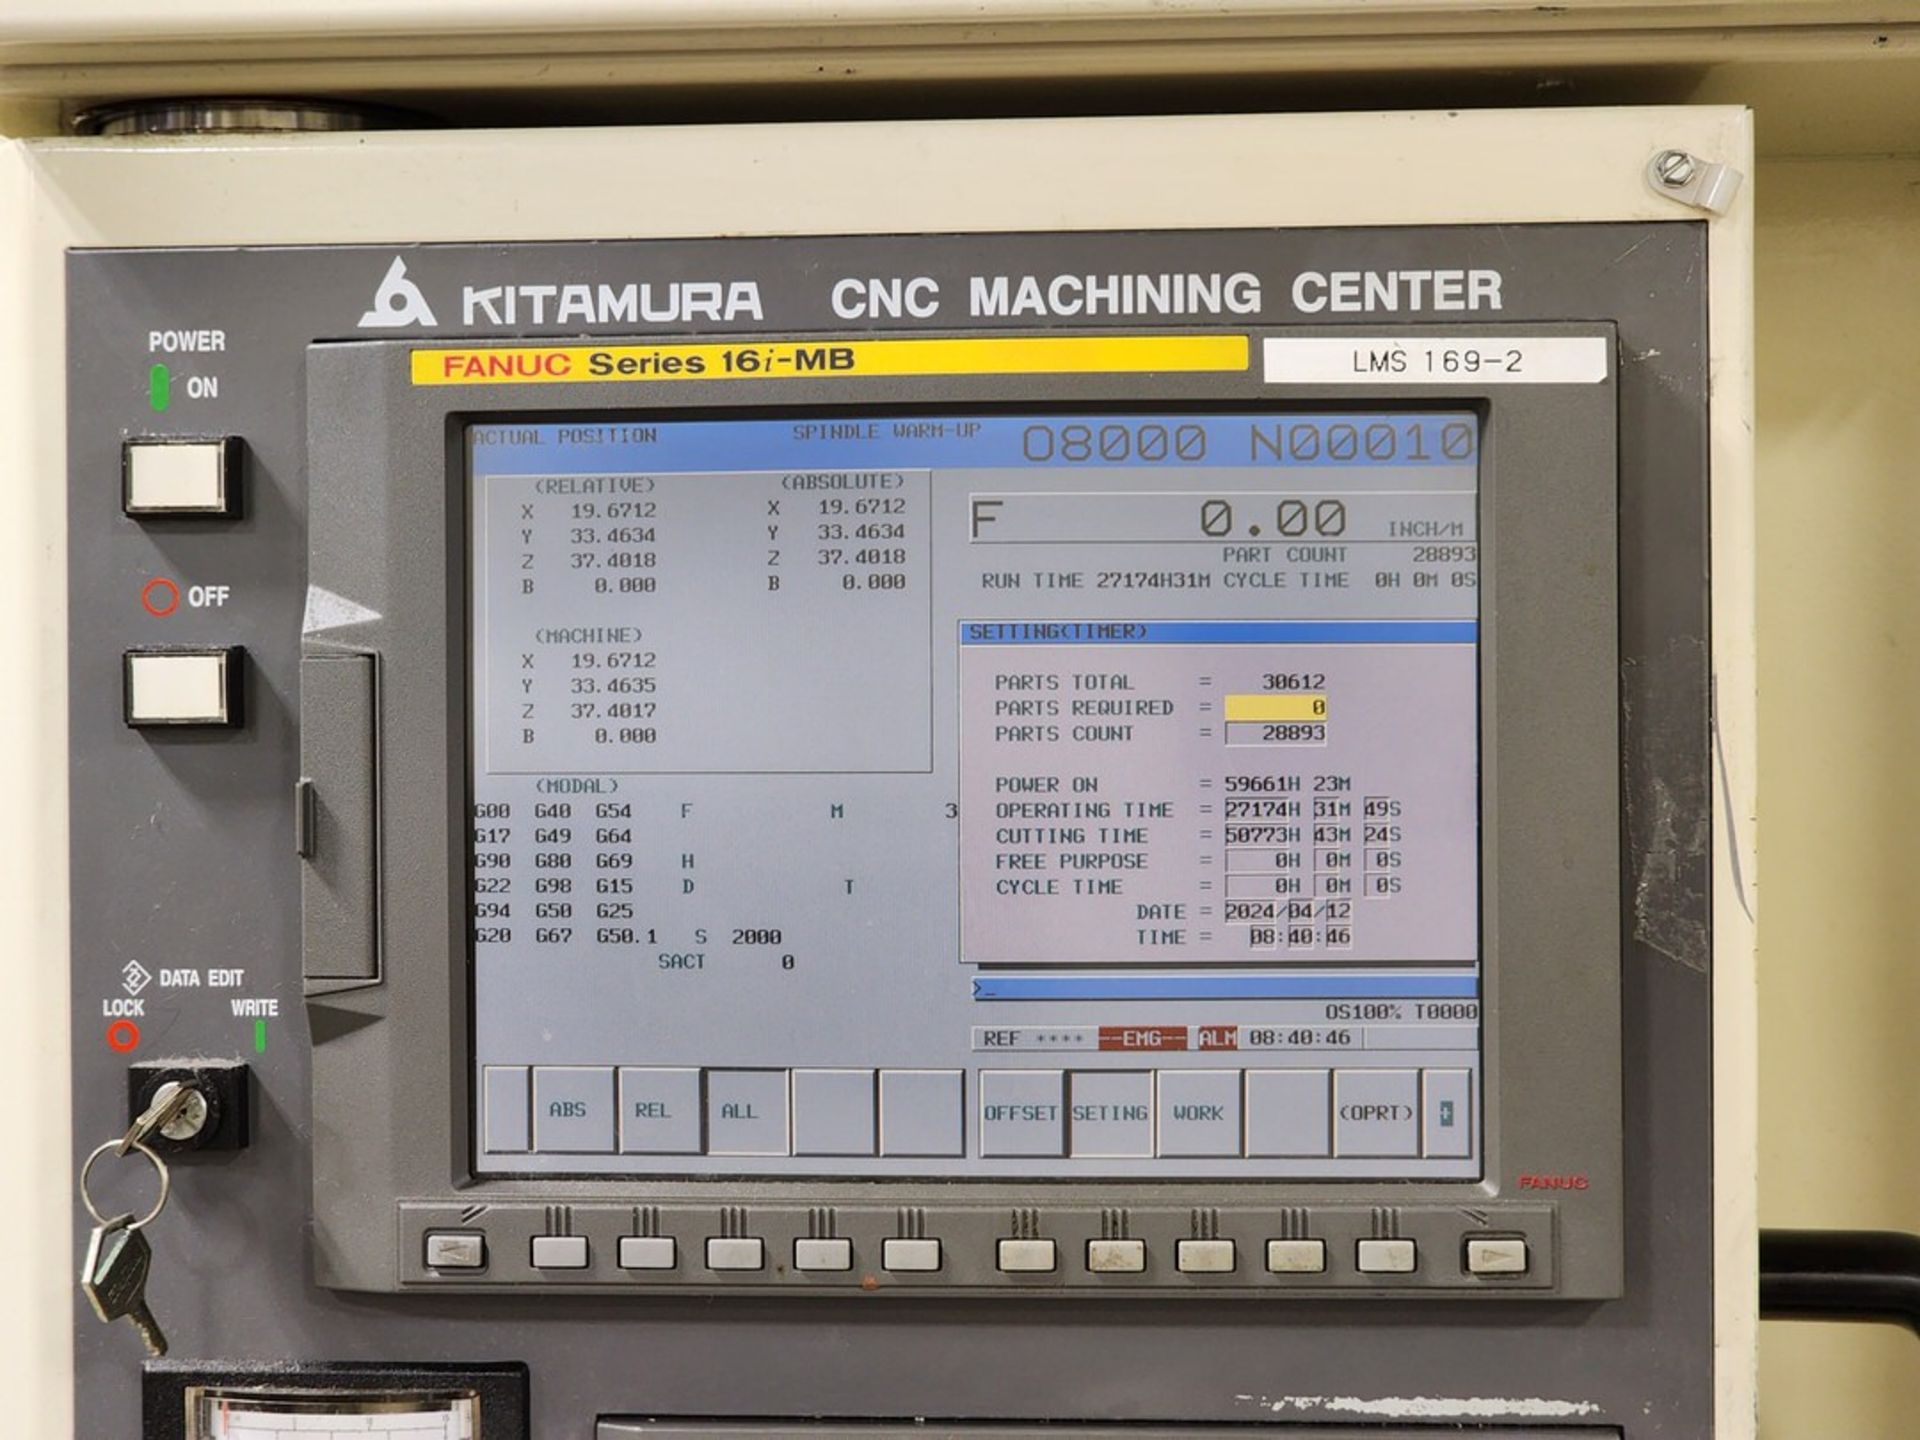 2005 Kitamura HX500i Horizontal Machining Center W/ Fanuc Series 16i-MB; 12,000 Spindle Speed - Image 18 of 18